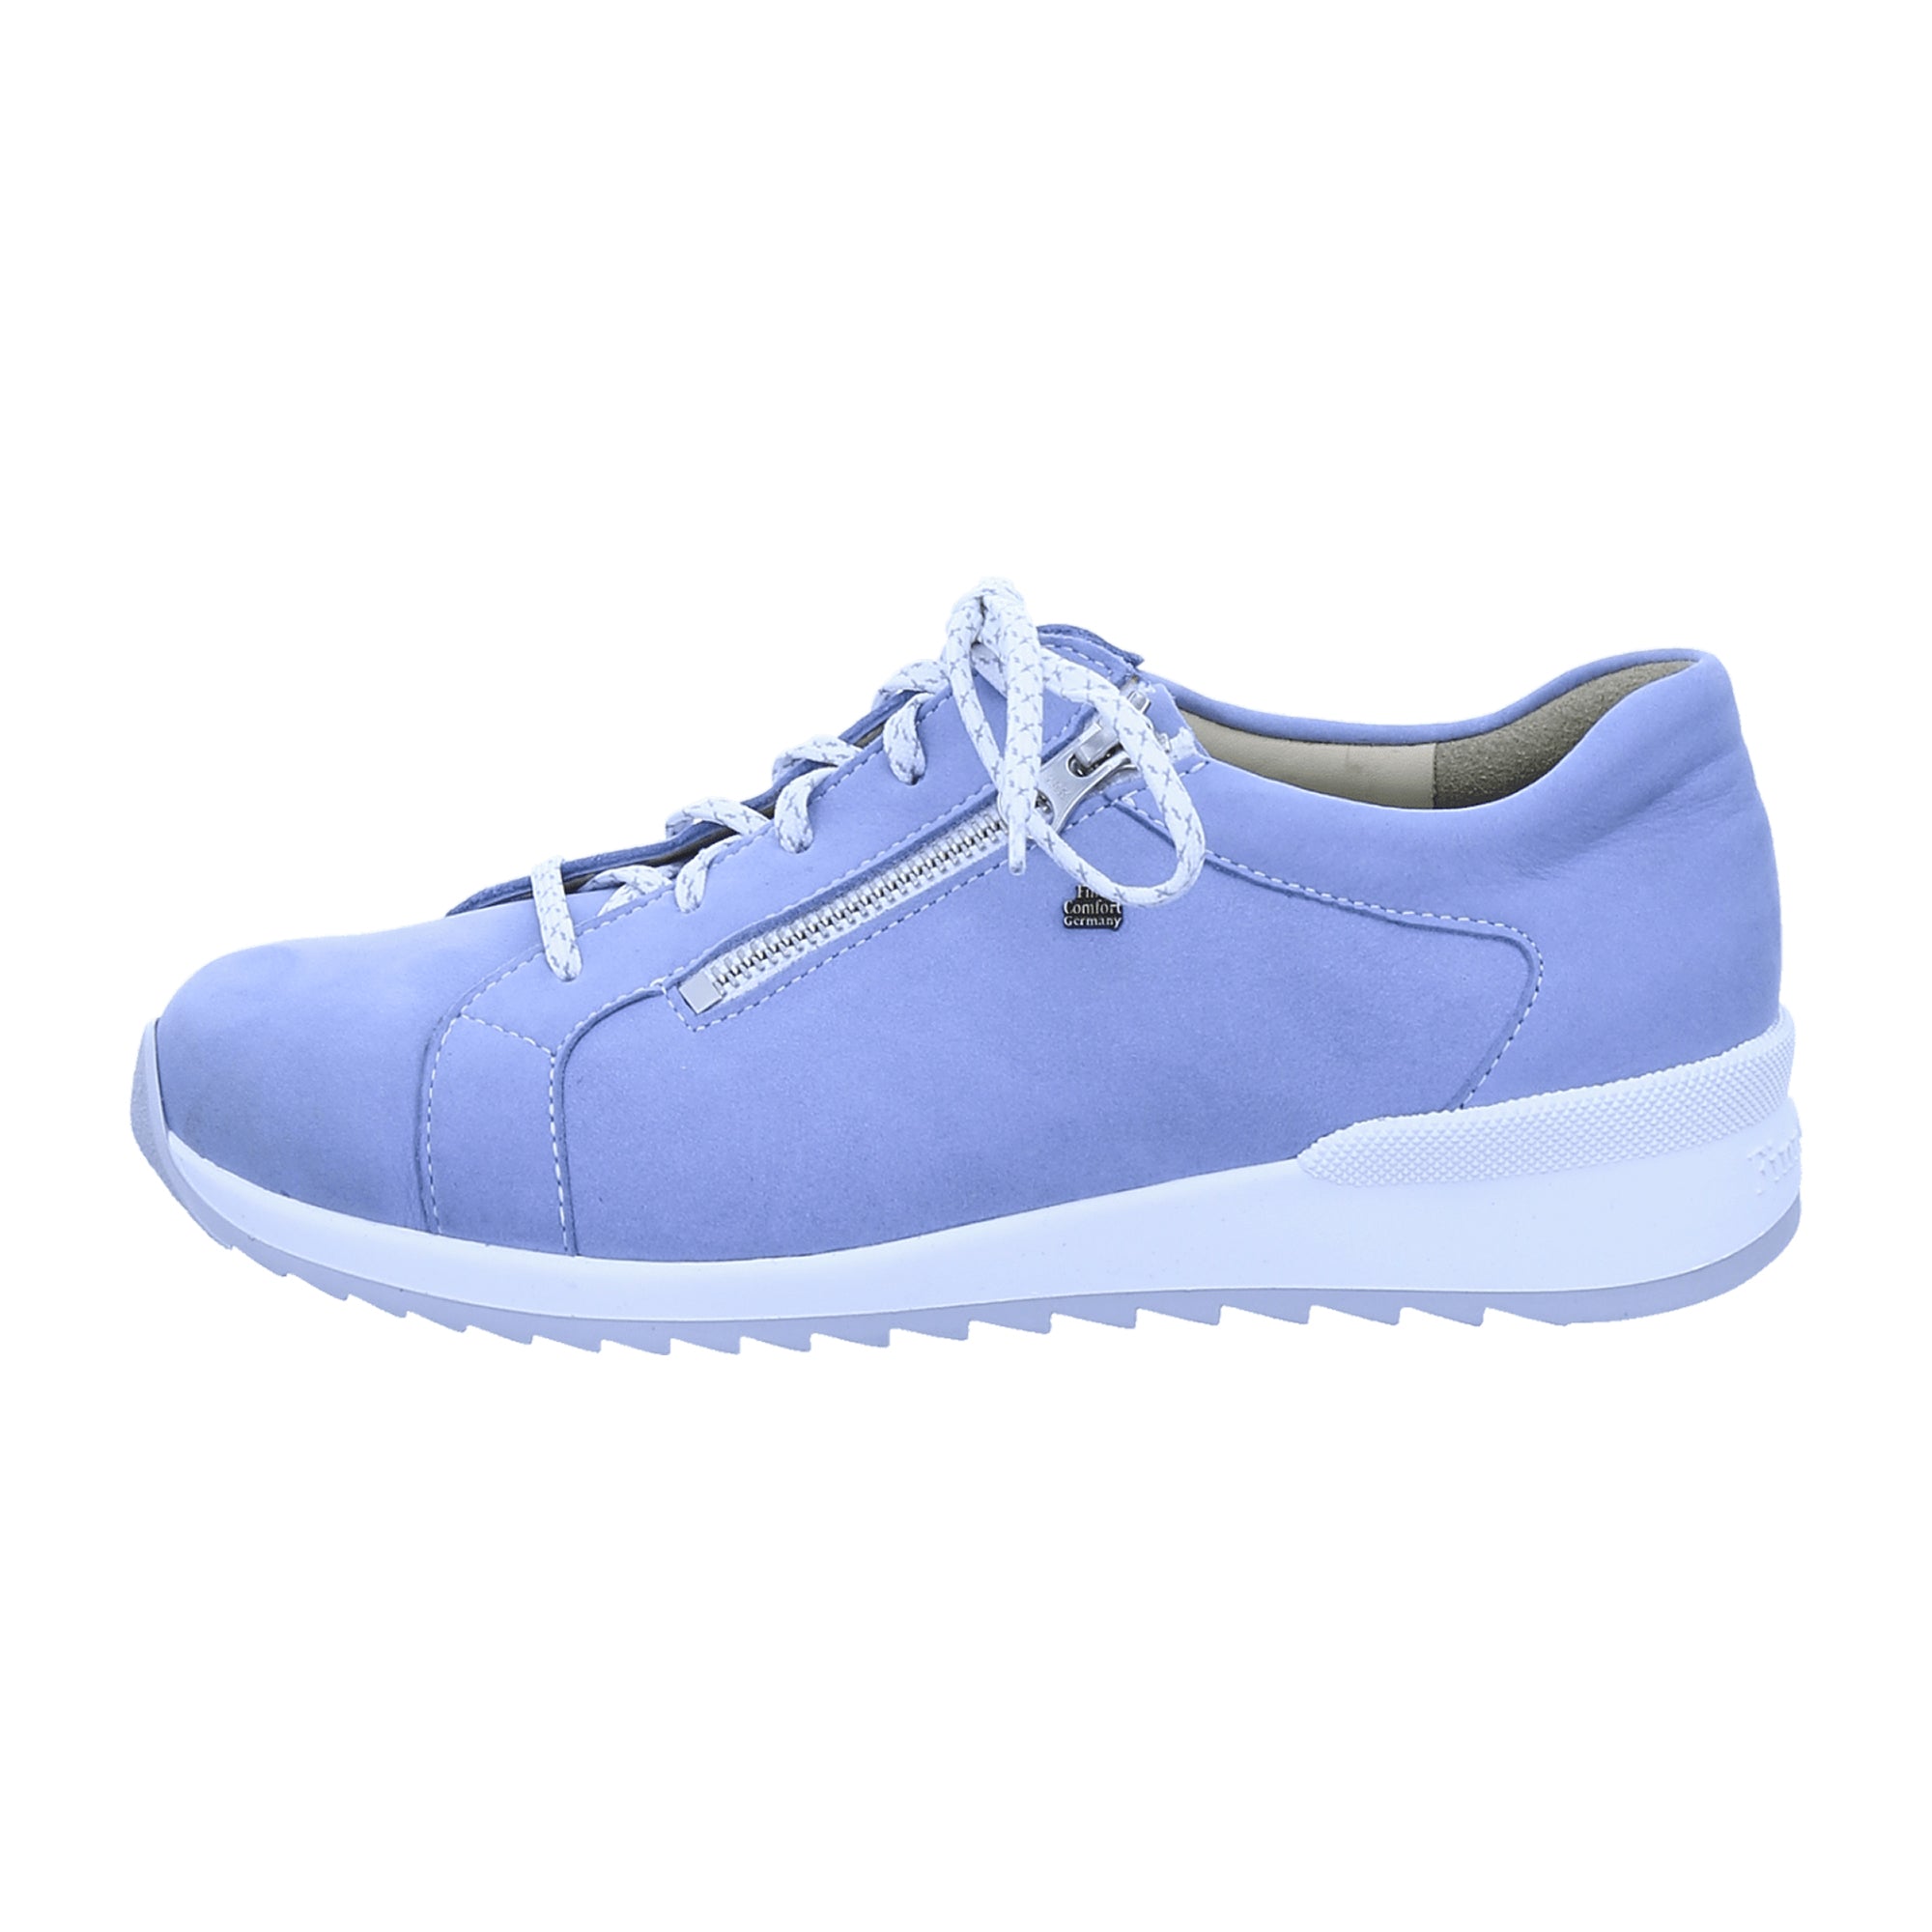 Finn Comfort Barretos Sky Women's Comfort Sneakers, Blue - Stylish & Durable